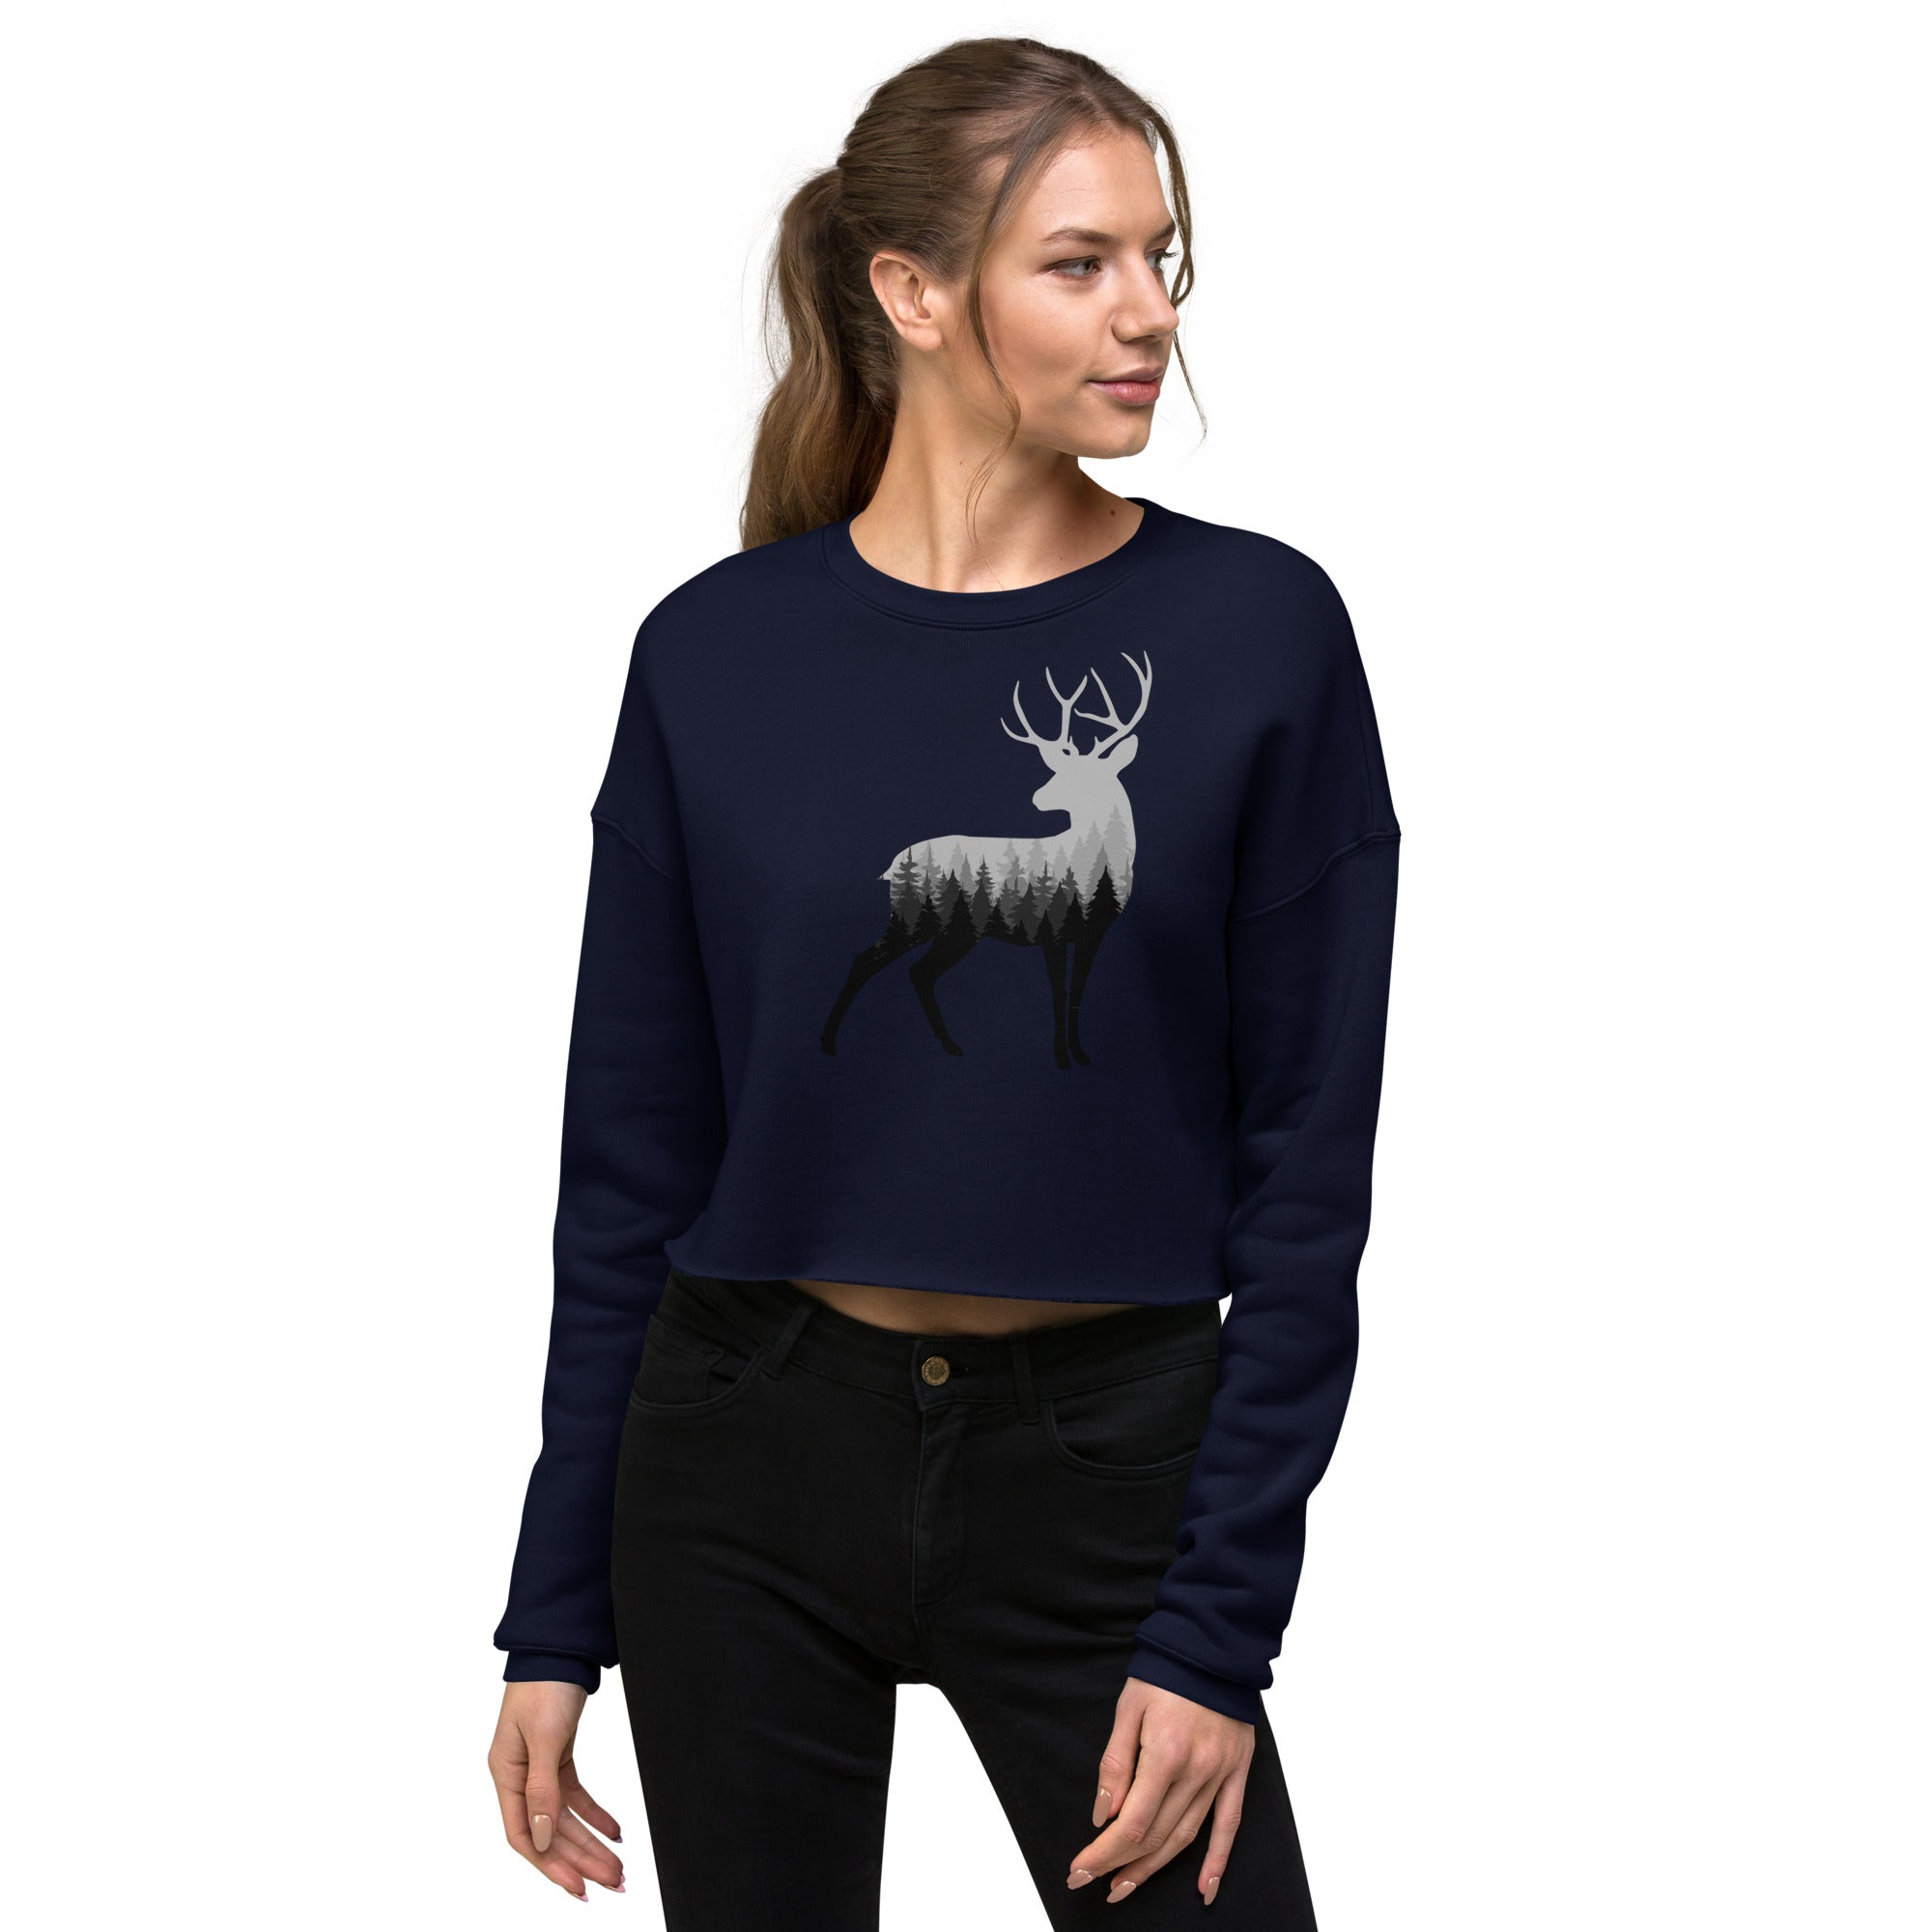 Buck n' Trees Women's Crop Sweatshirt